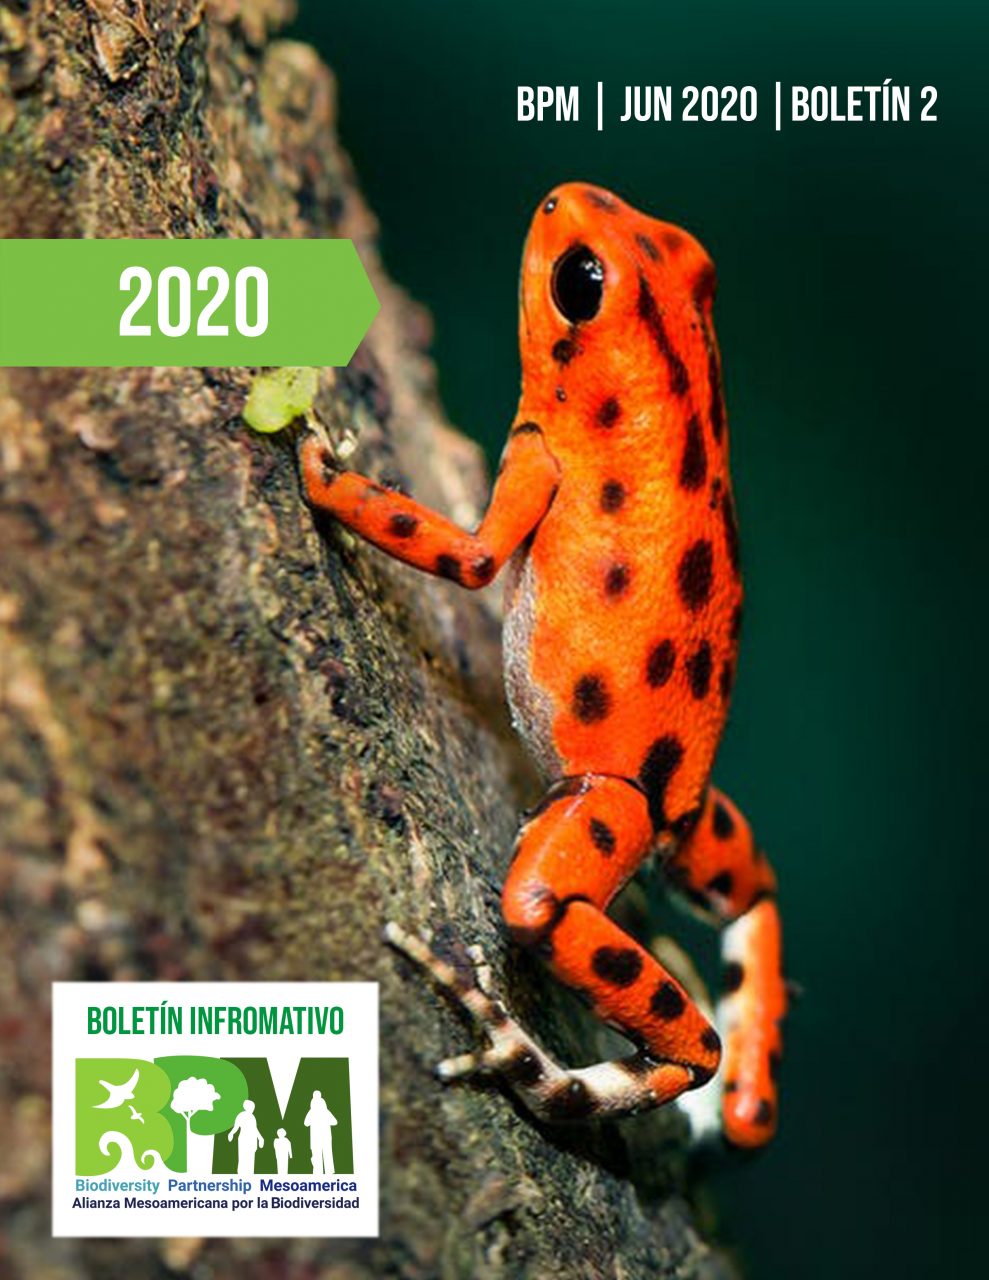 Biodiversity Partnership Mesoamerica (BPM) - II Boletín 2020